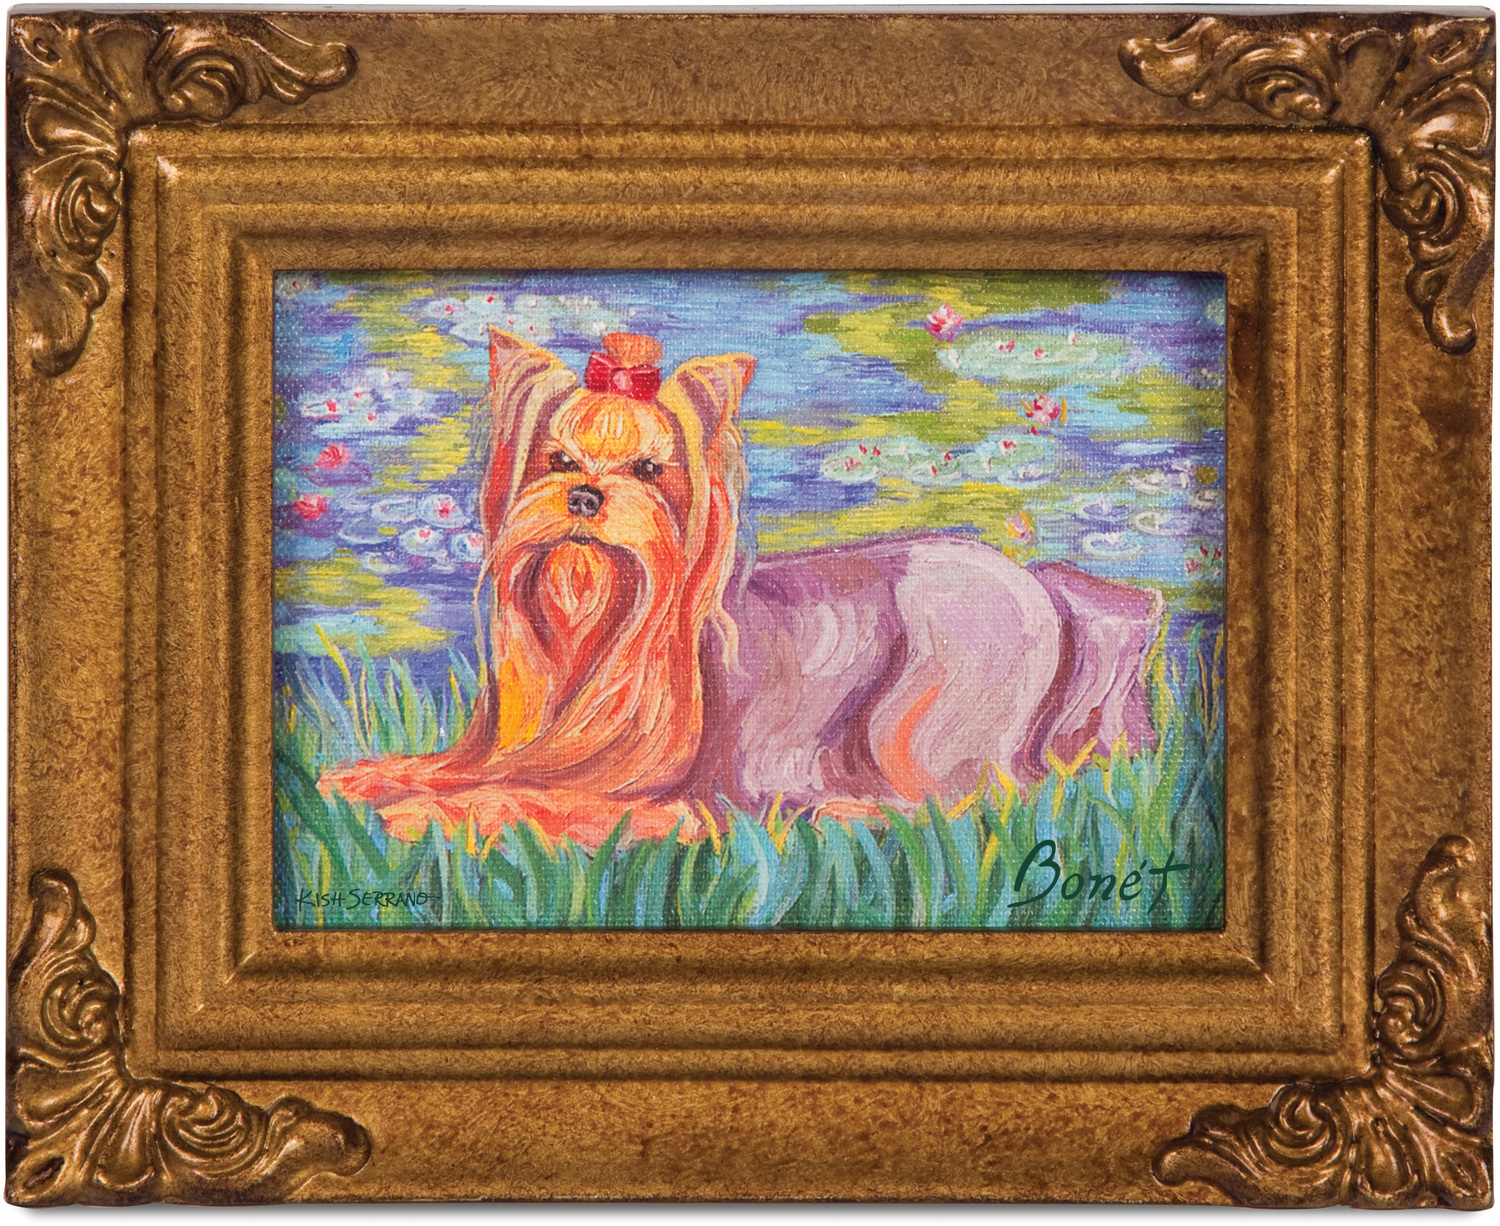 Yorkshire Terrier - Bonet by Paw Palettes - Yorkshire Terrier - Bonet - 3.5"x5" Framed Canvas